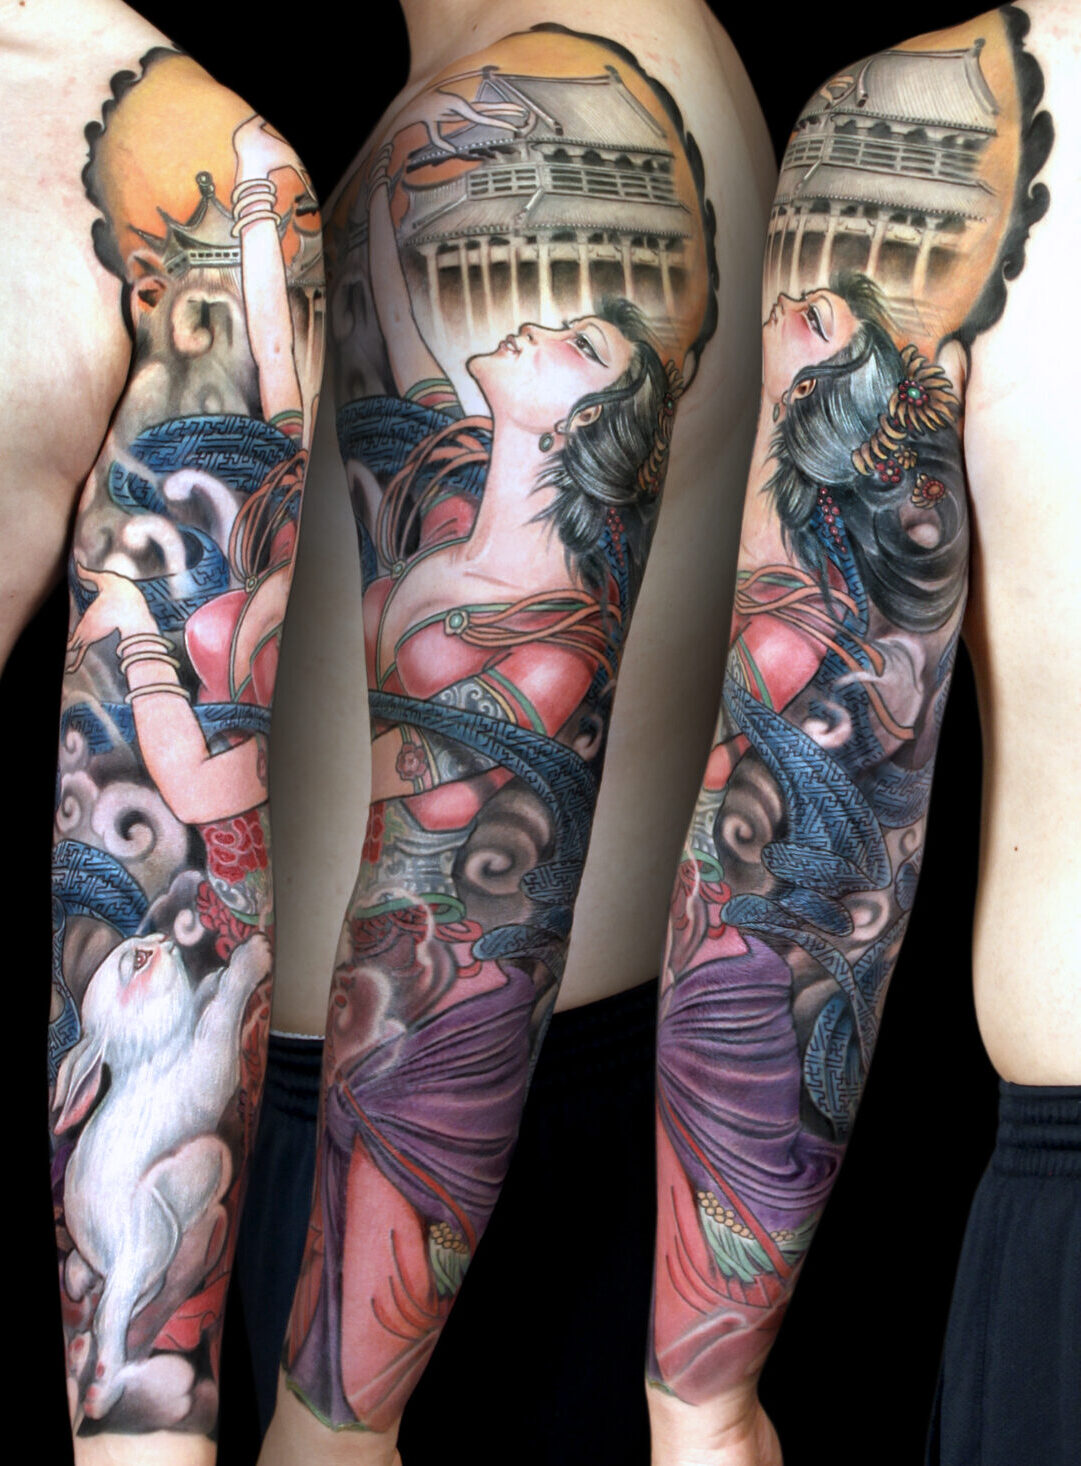 Jess Yen aka HoriYen, My Tattoo, Alhambra, California (USA)